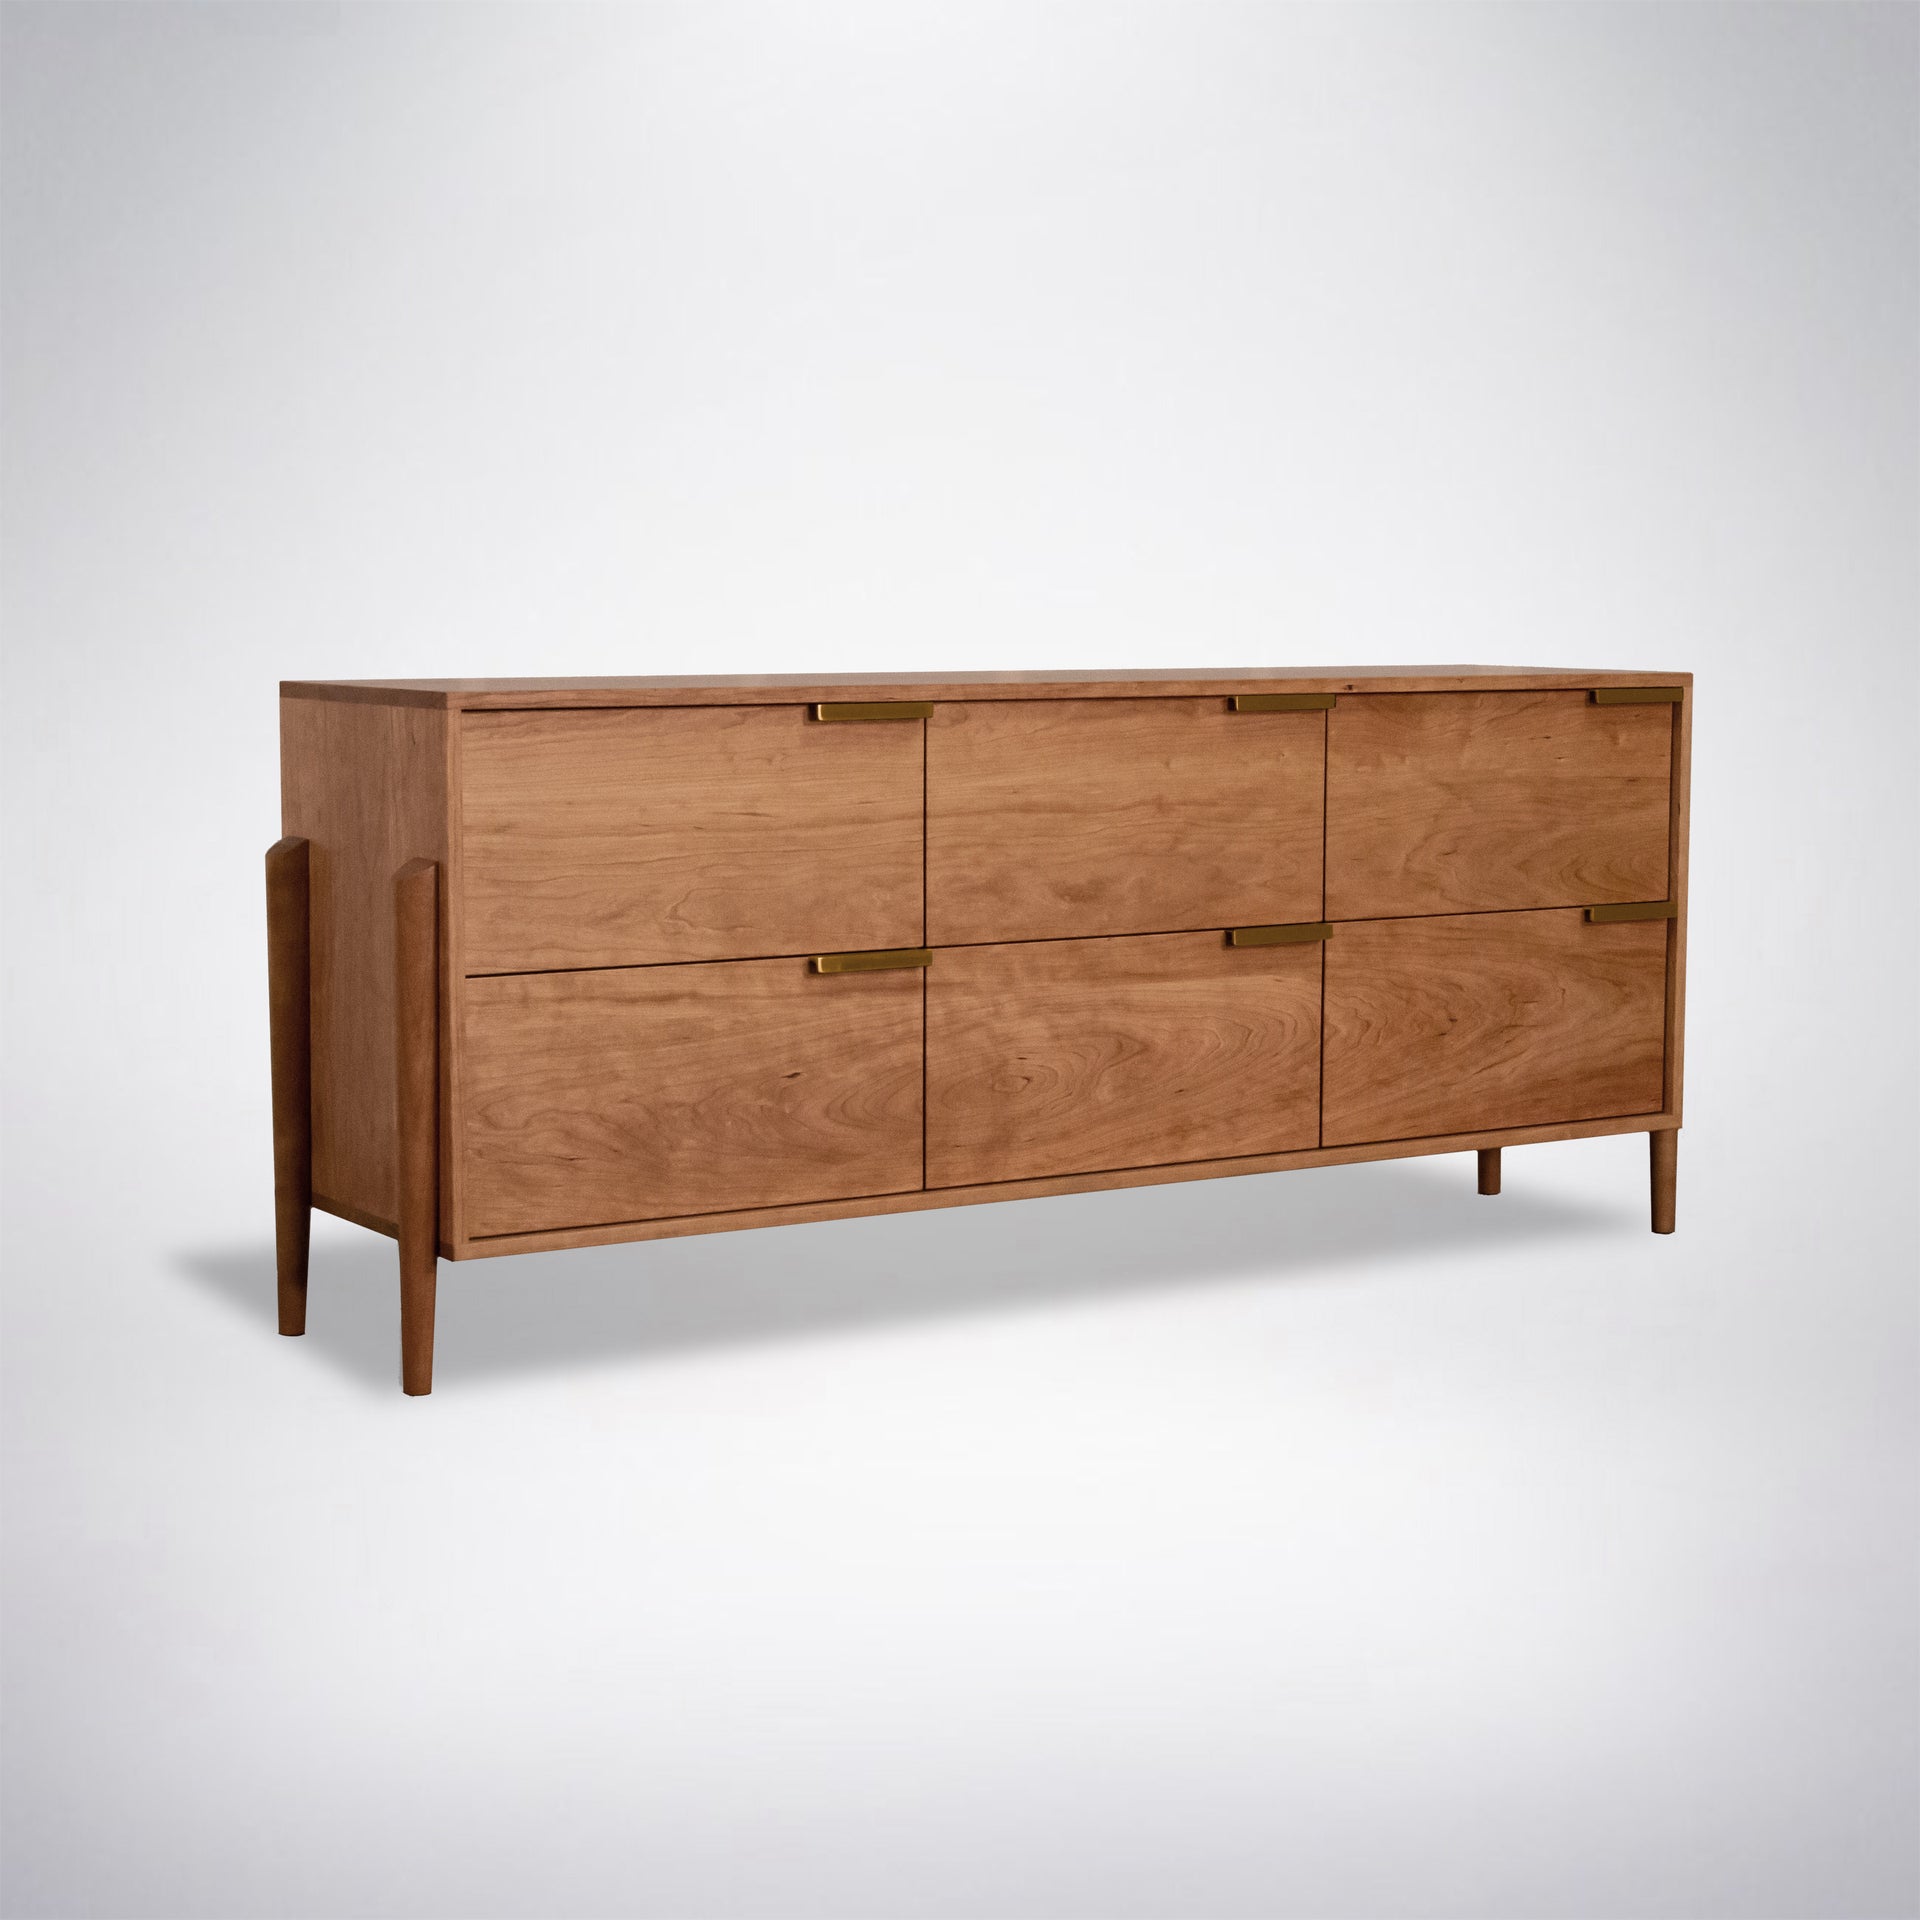 Modern dresser in natural cherry wood with brass handles